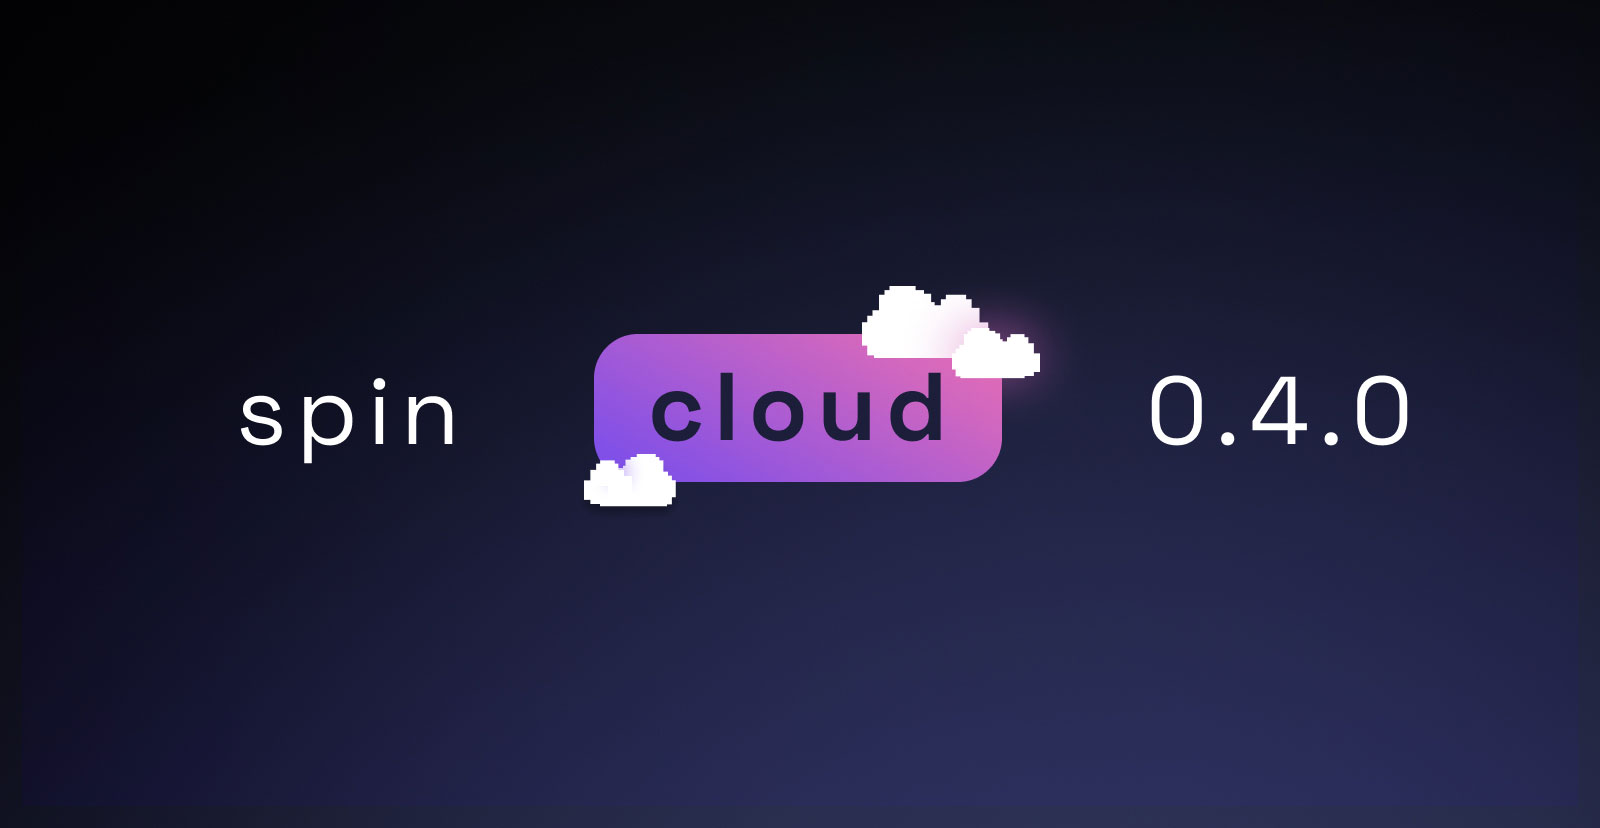 Spin Cloud 0.4.0 changelog